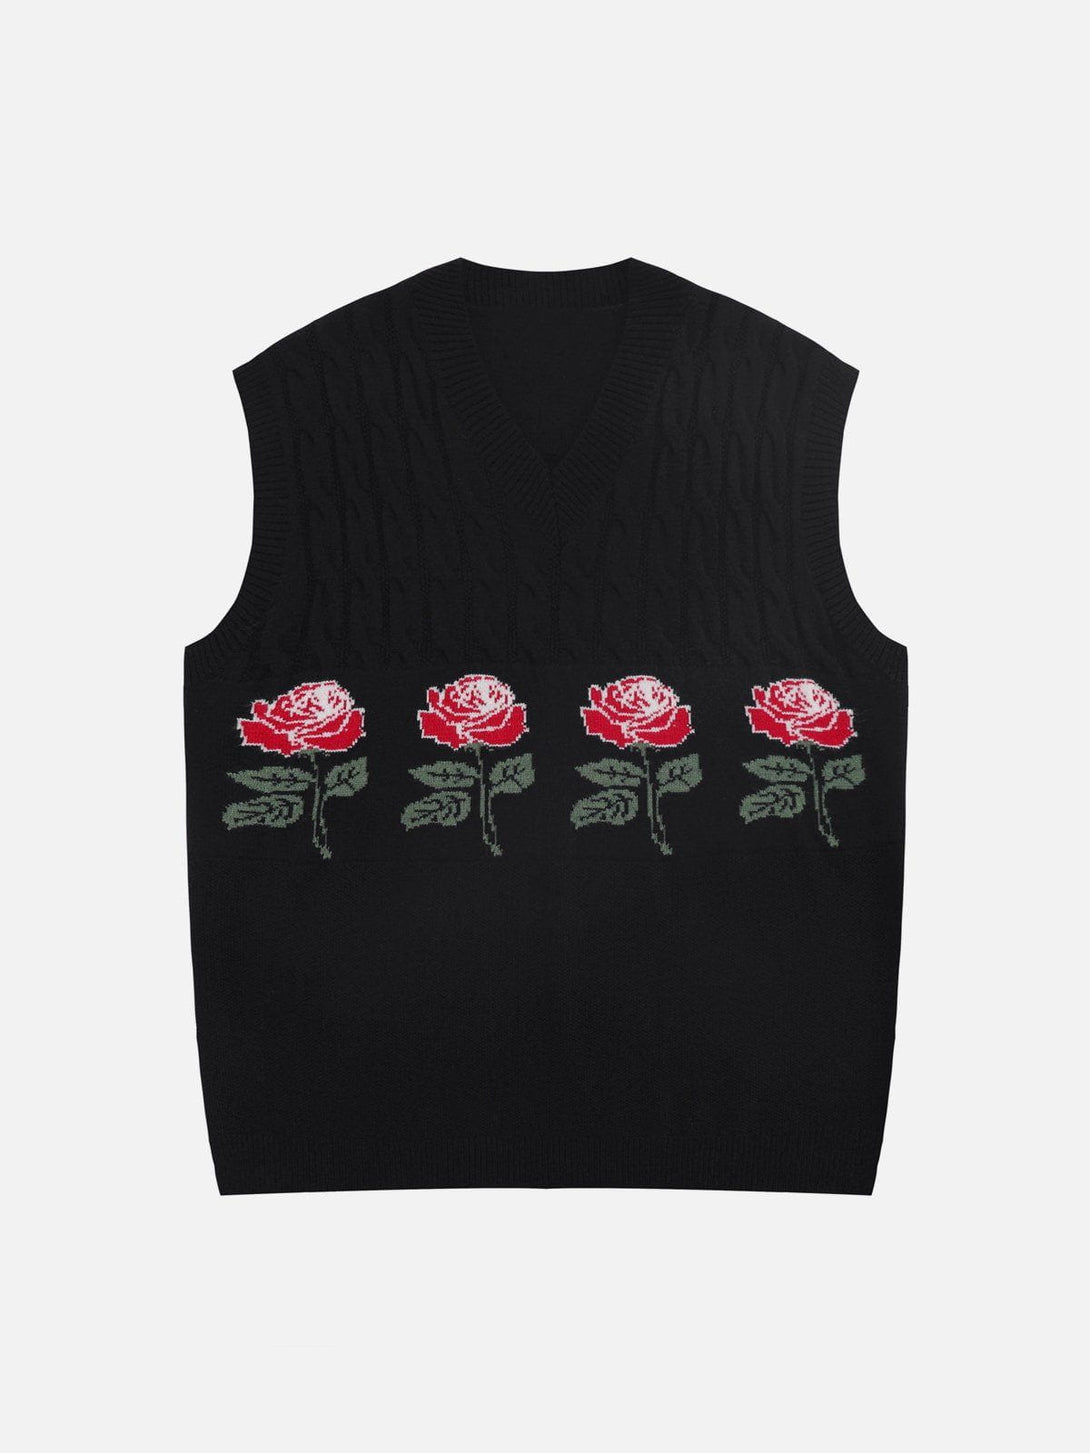 Levefly - Rose Pattern Sweater Vest - Streetwear Fashion - levefly.com